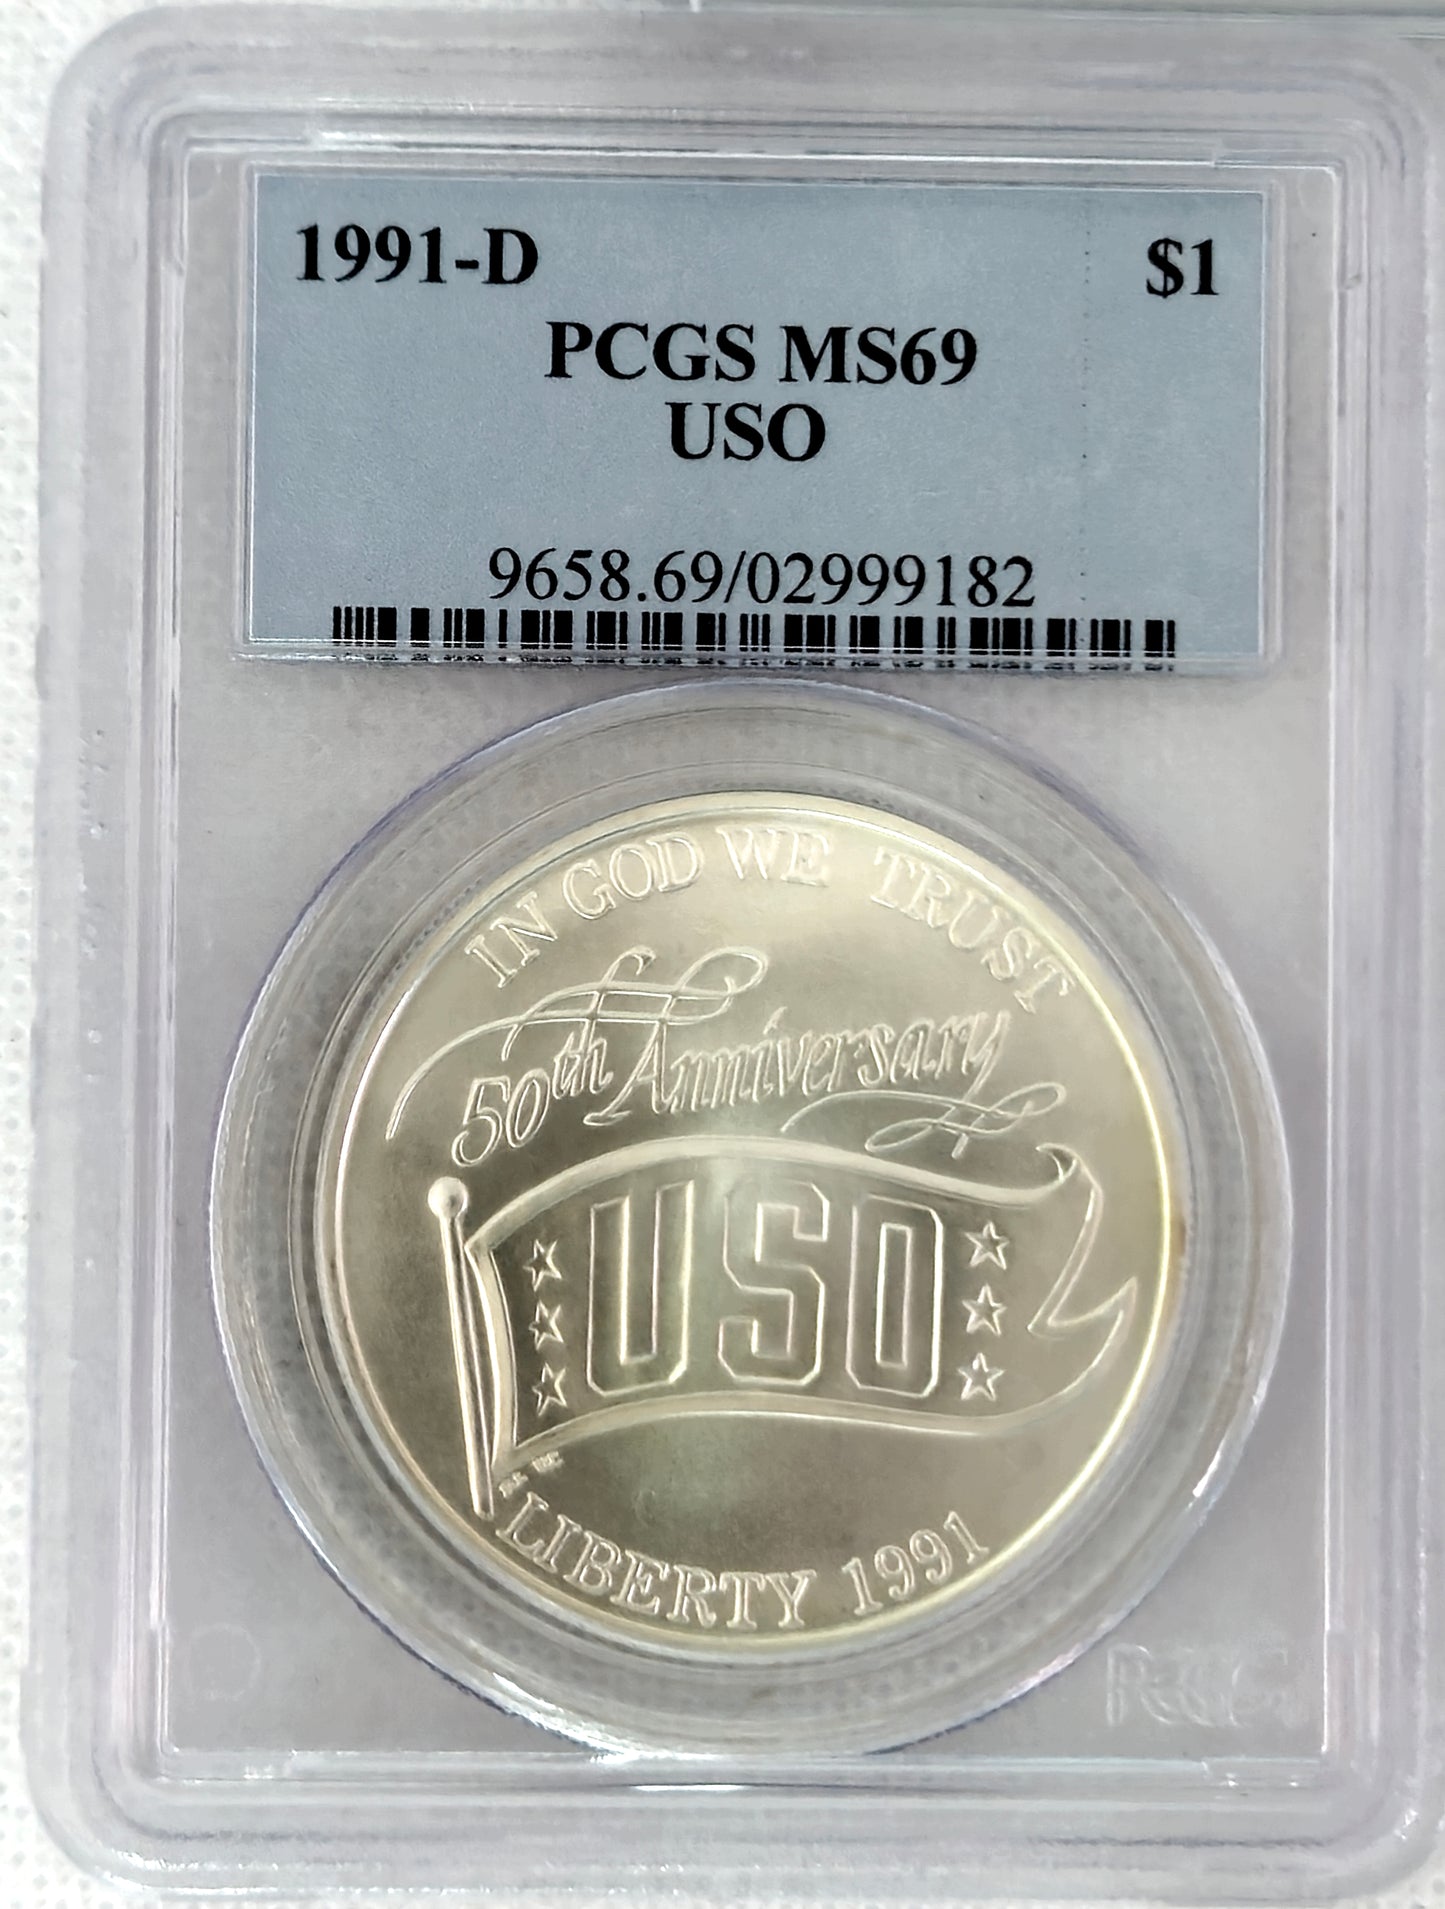 1991-D USO United Service Organization PCGS MS 69 Silver Dollar